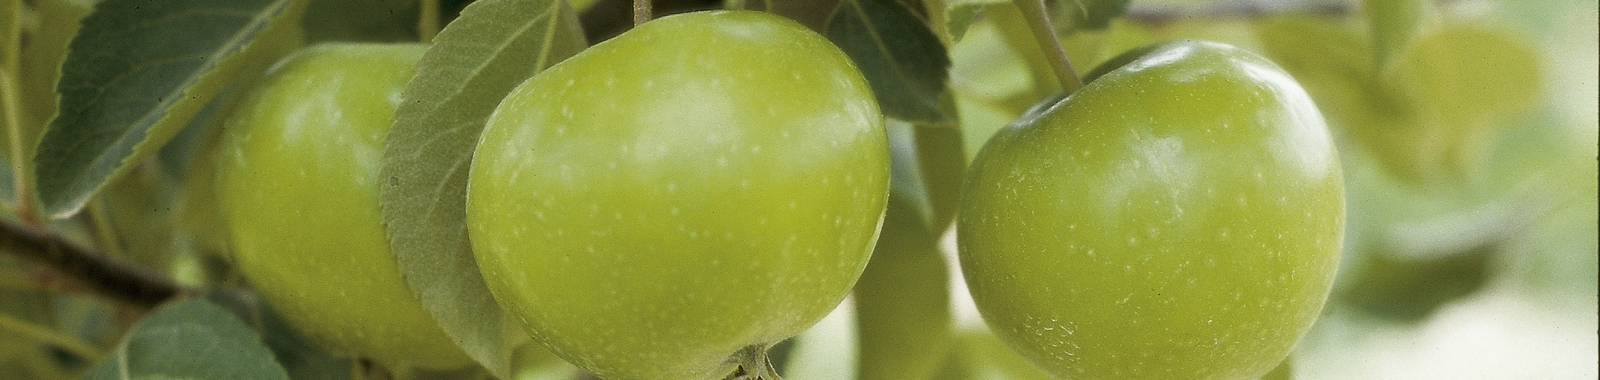 Apple crop nutrition programme